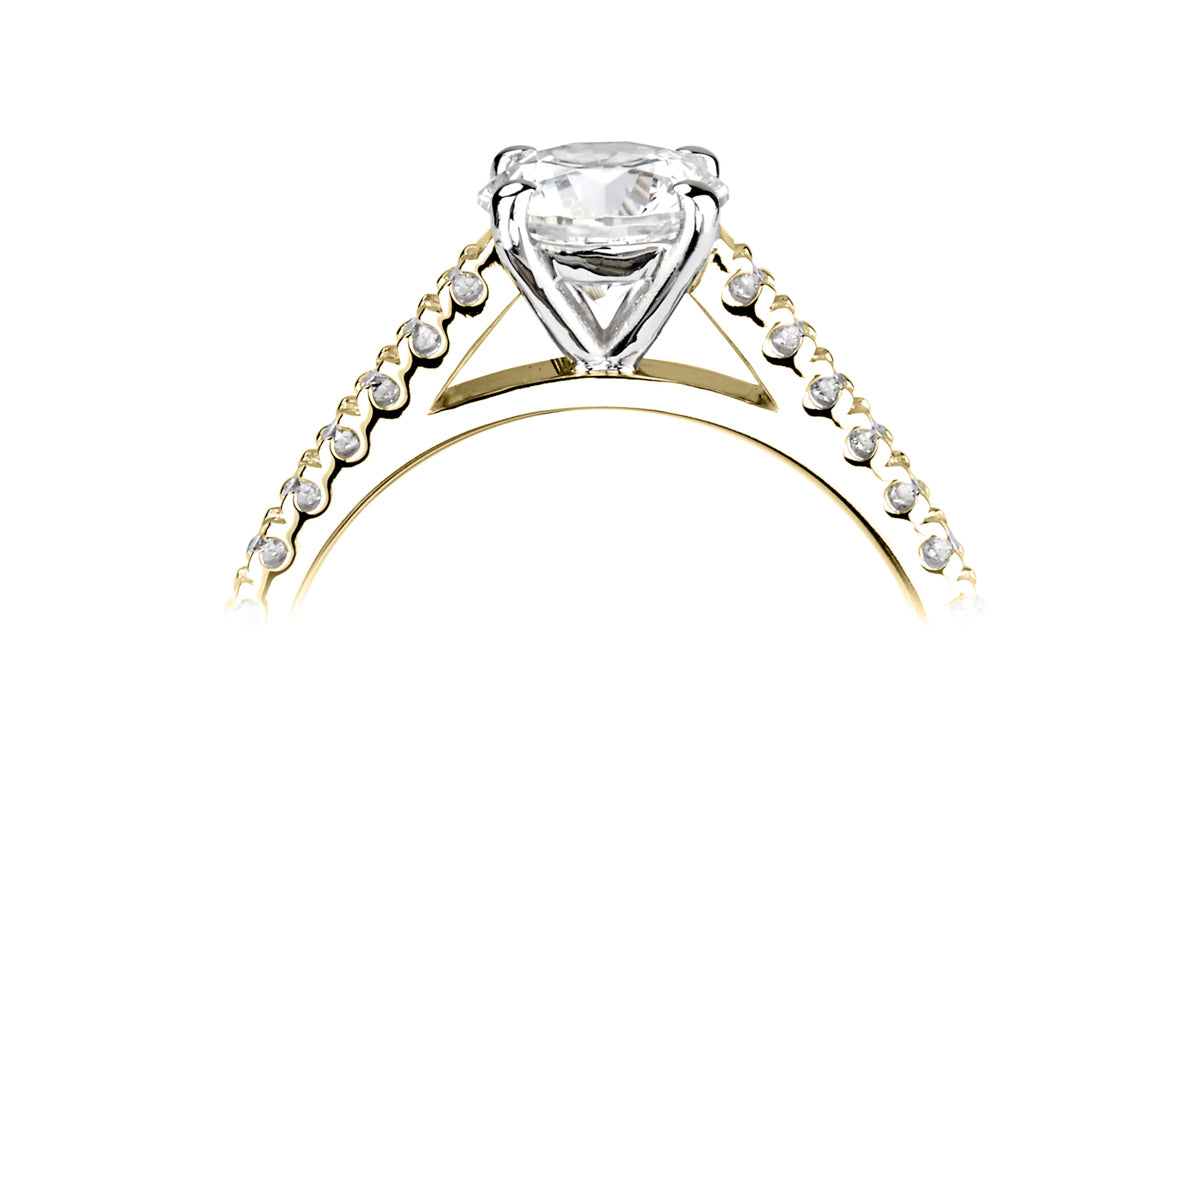 Brilliant round cut 4 claw diamond stone set shoulder ring